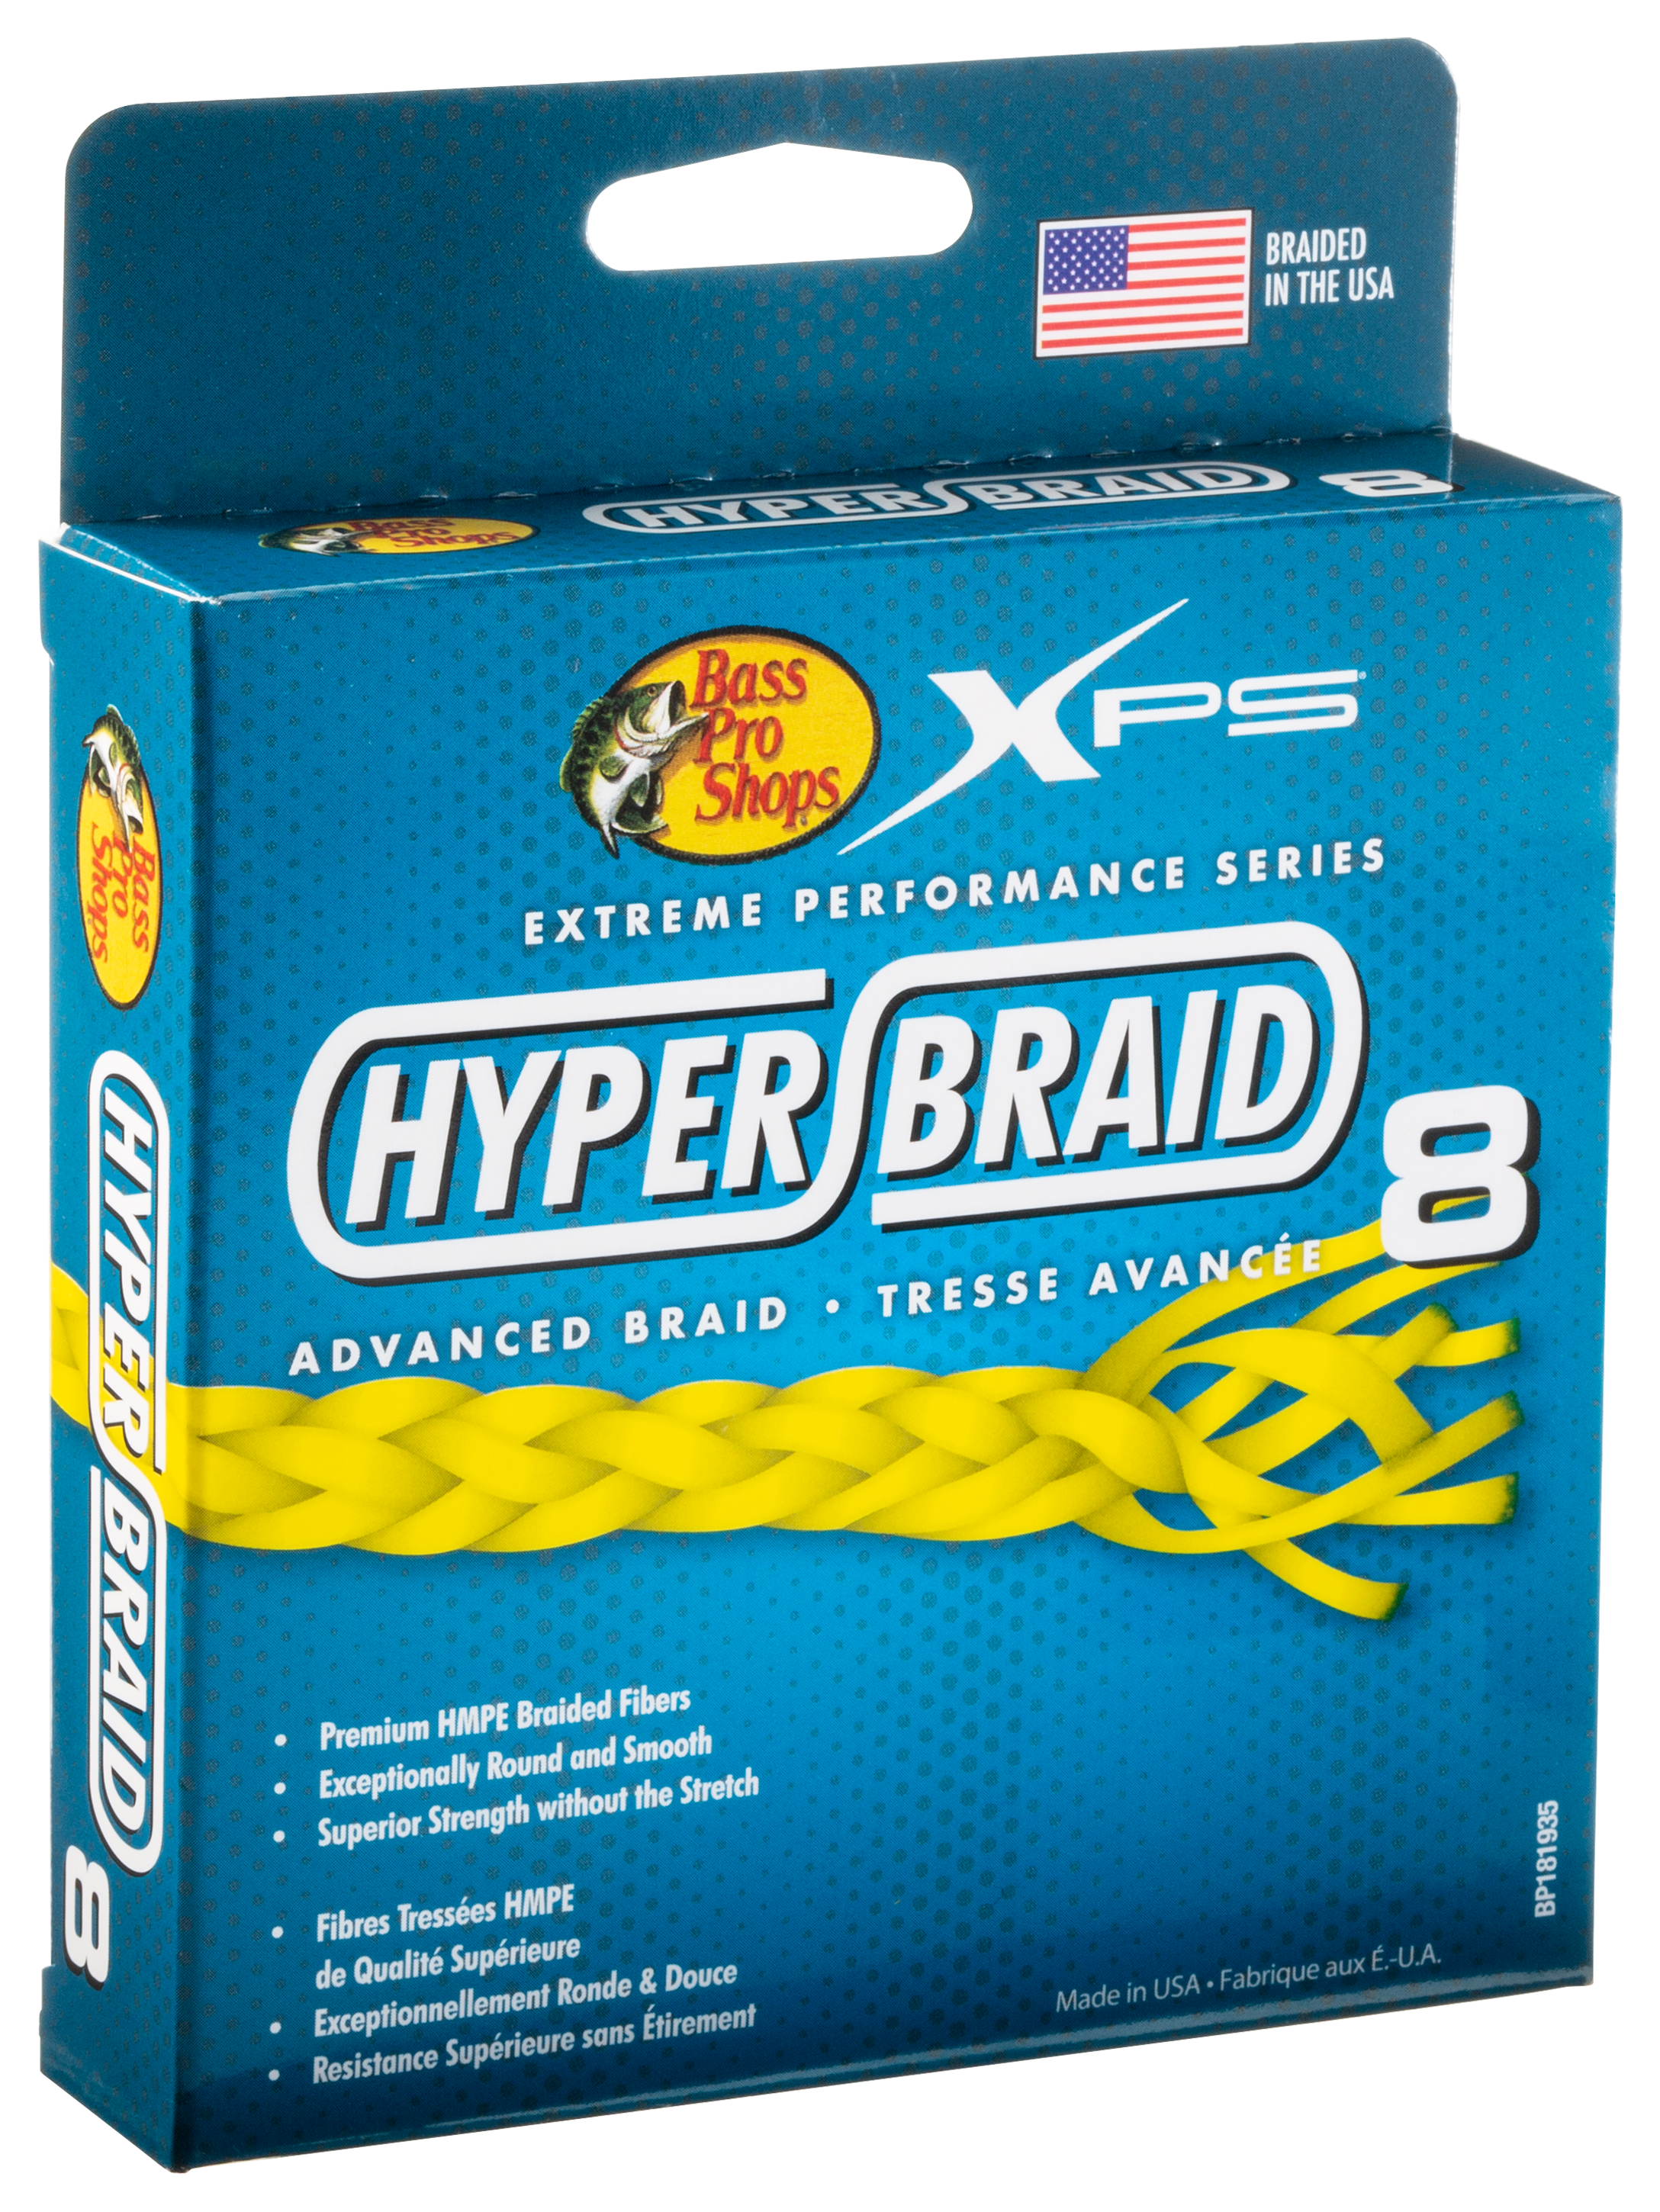 Bass Pro Shops XPS Hyper Braid 8 Fishing Line